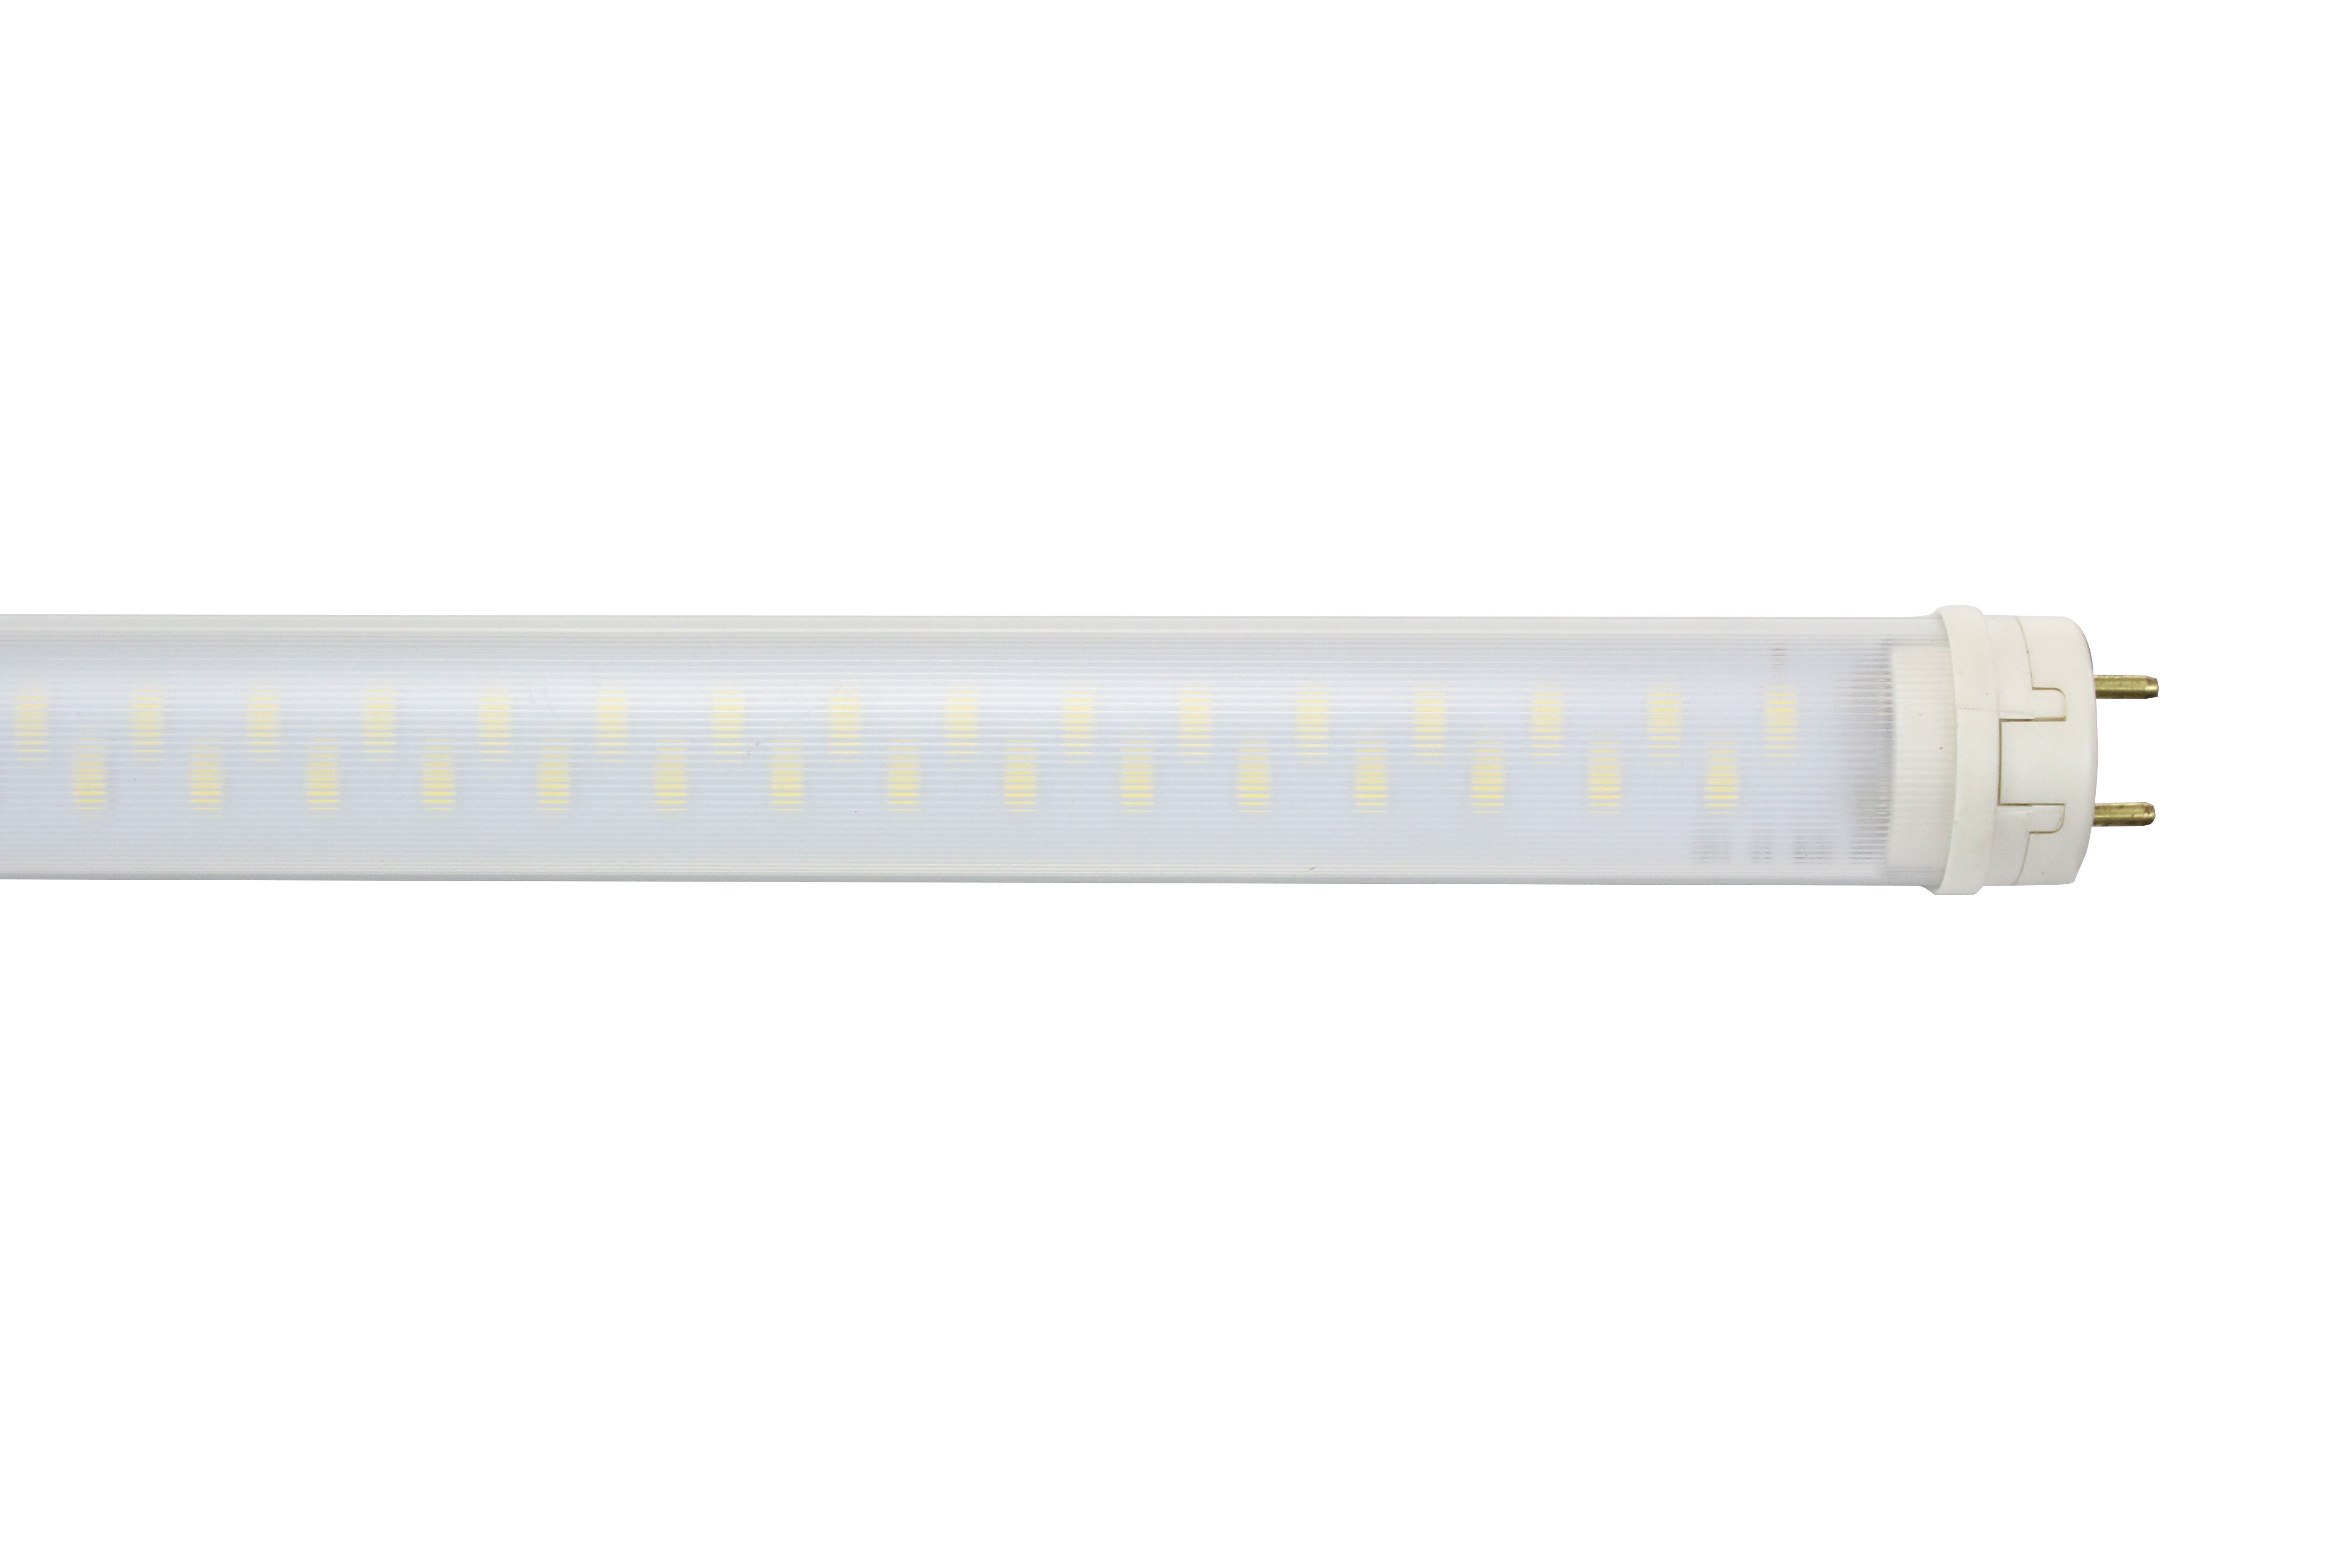 15.9 Watt LED Replacement Lamp for Fluorescent Light Fixtures